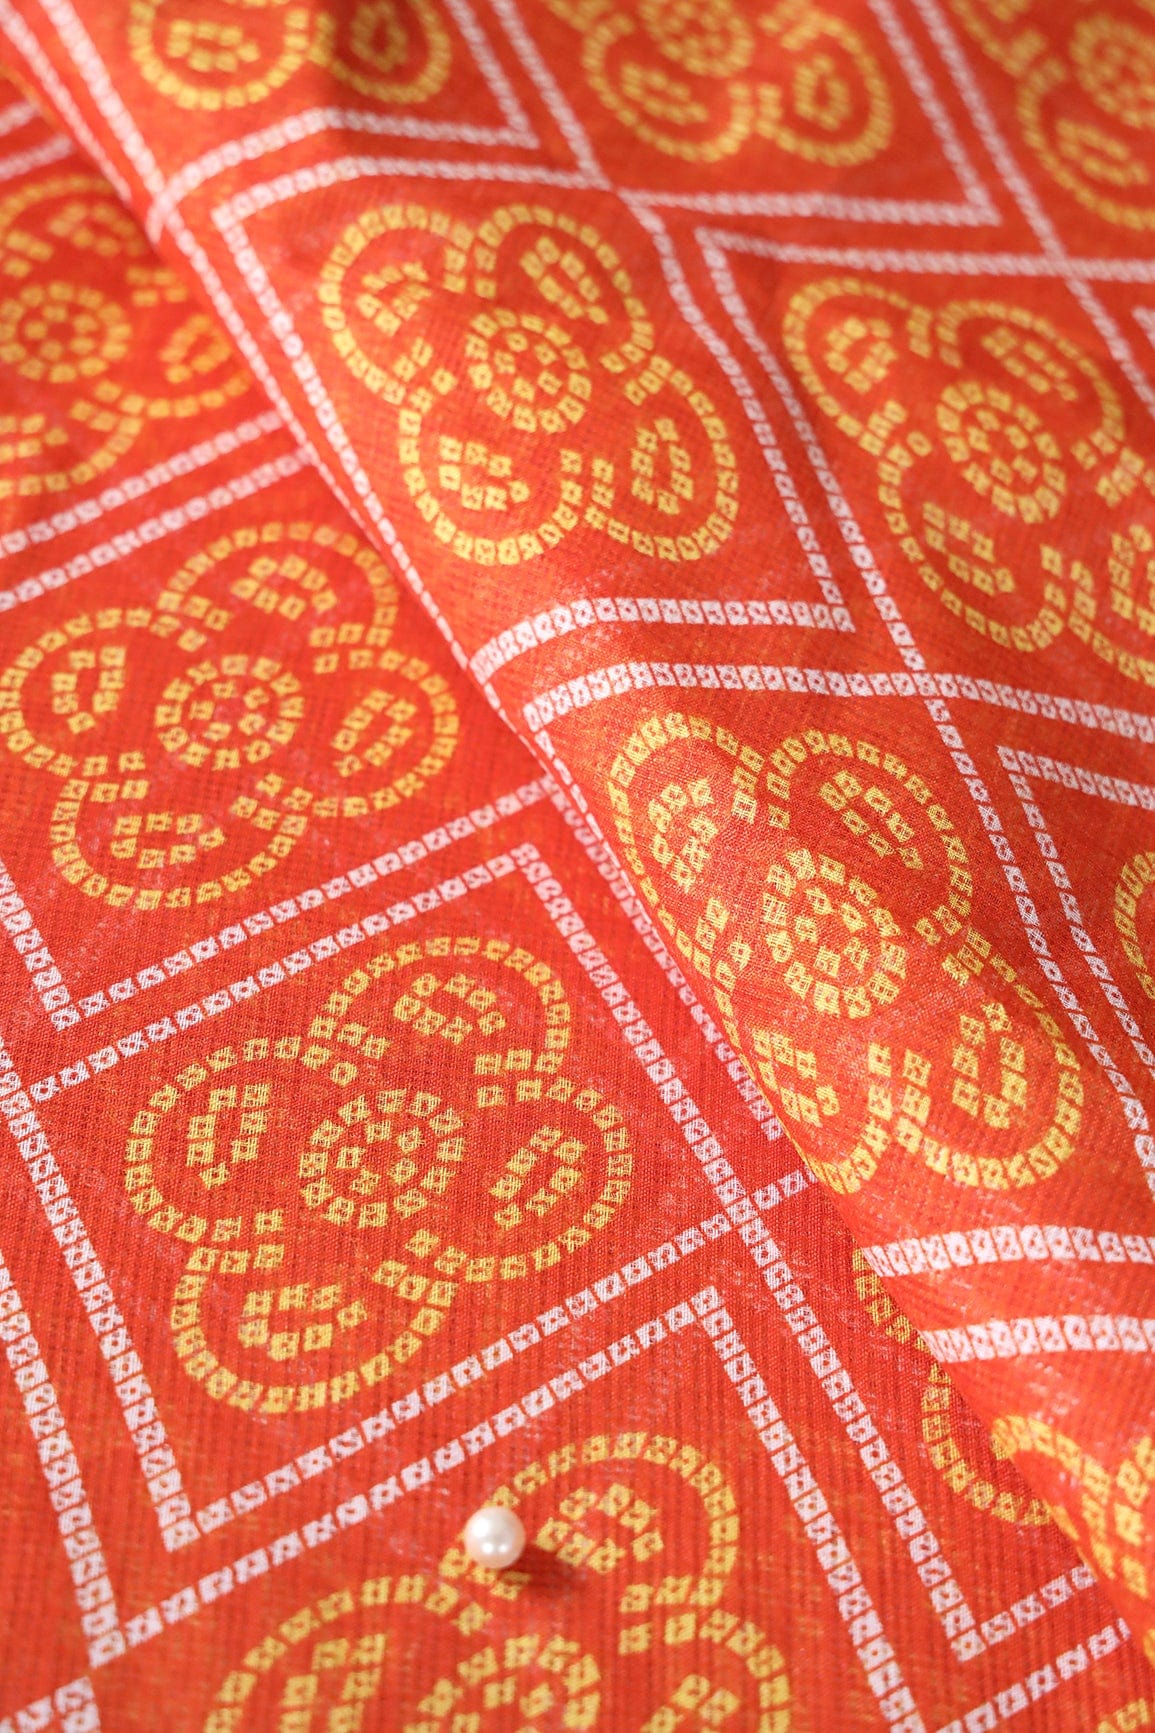 doeraa Prints White And Yellow Bandhani Print On Orange Kota Doria Fabric